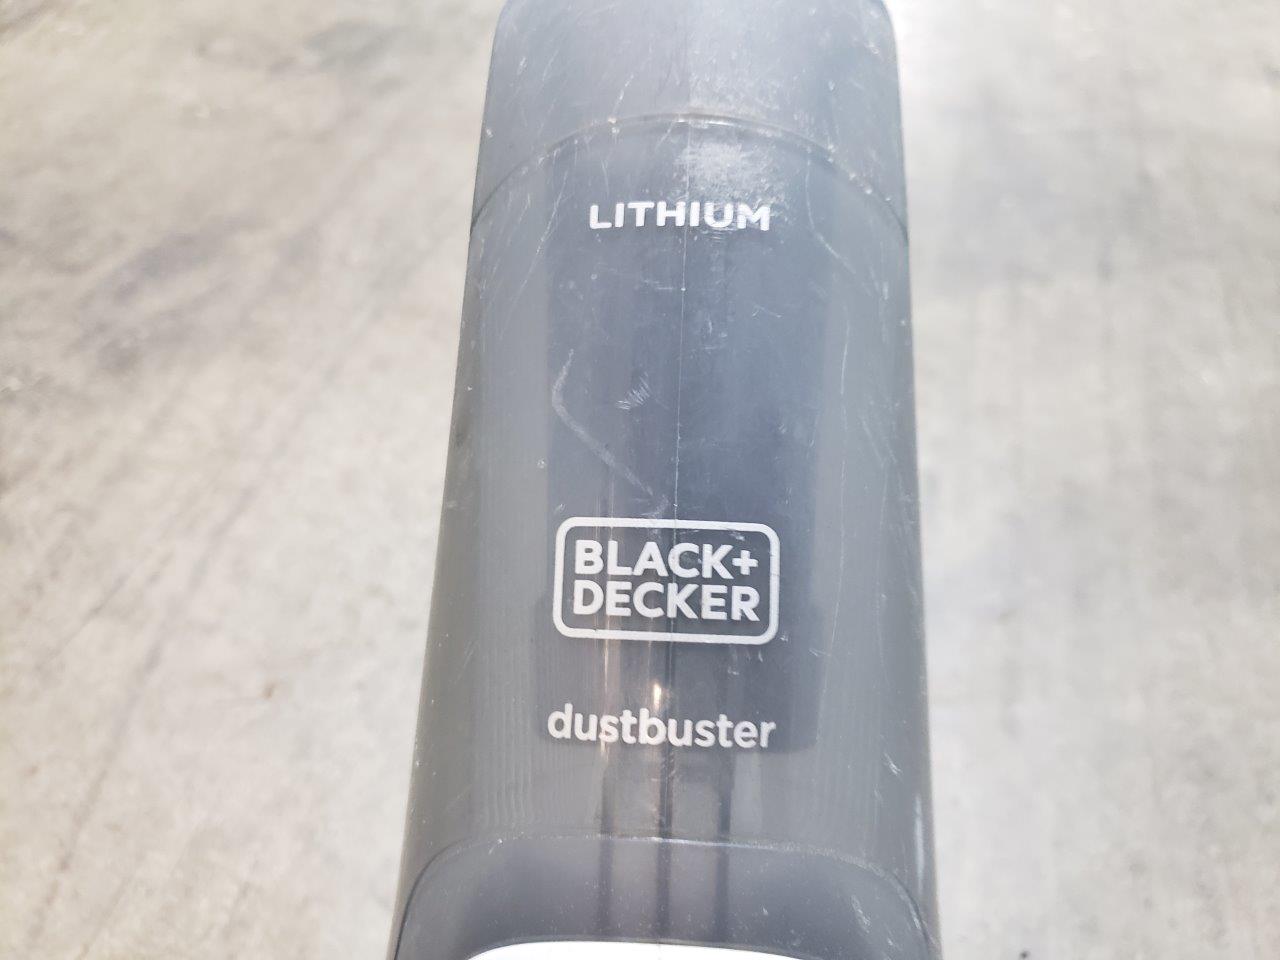 https://www.miscellaneous.deals/wp-content/uploads/2021/07/Black-Decker-Dustbuster-Lithium-Hand-Vacuum-with-15V-S003AQU1500015-_133012.jpg